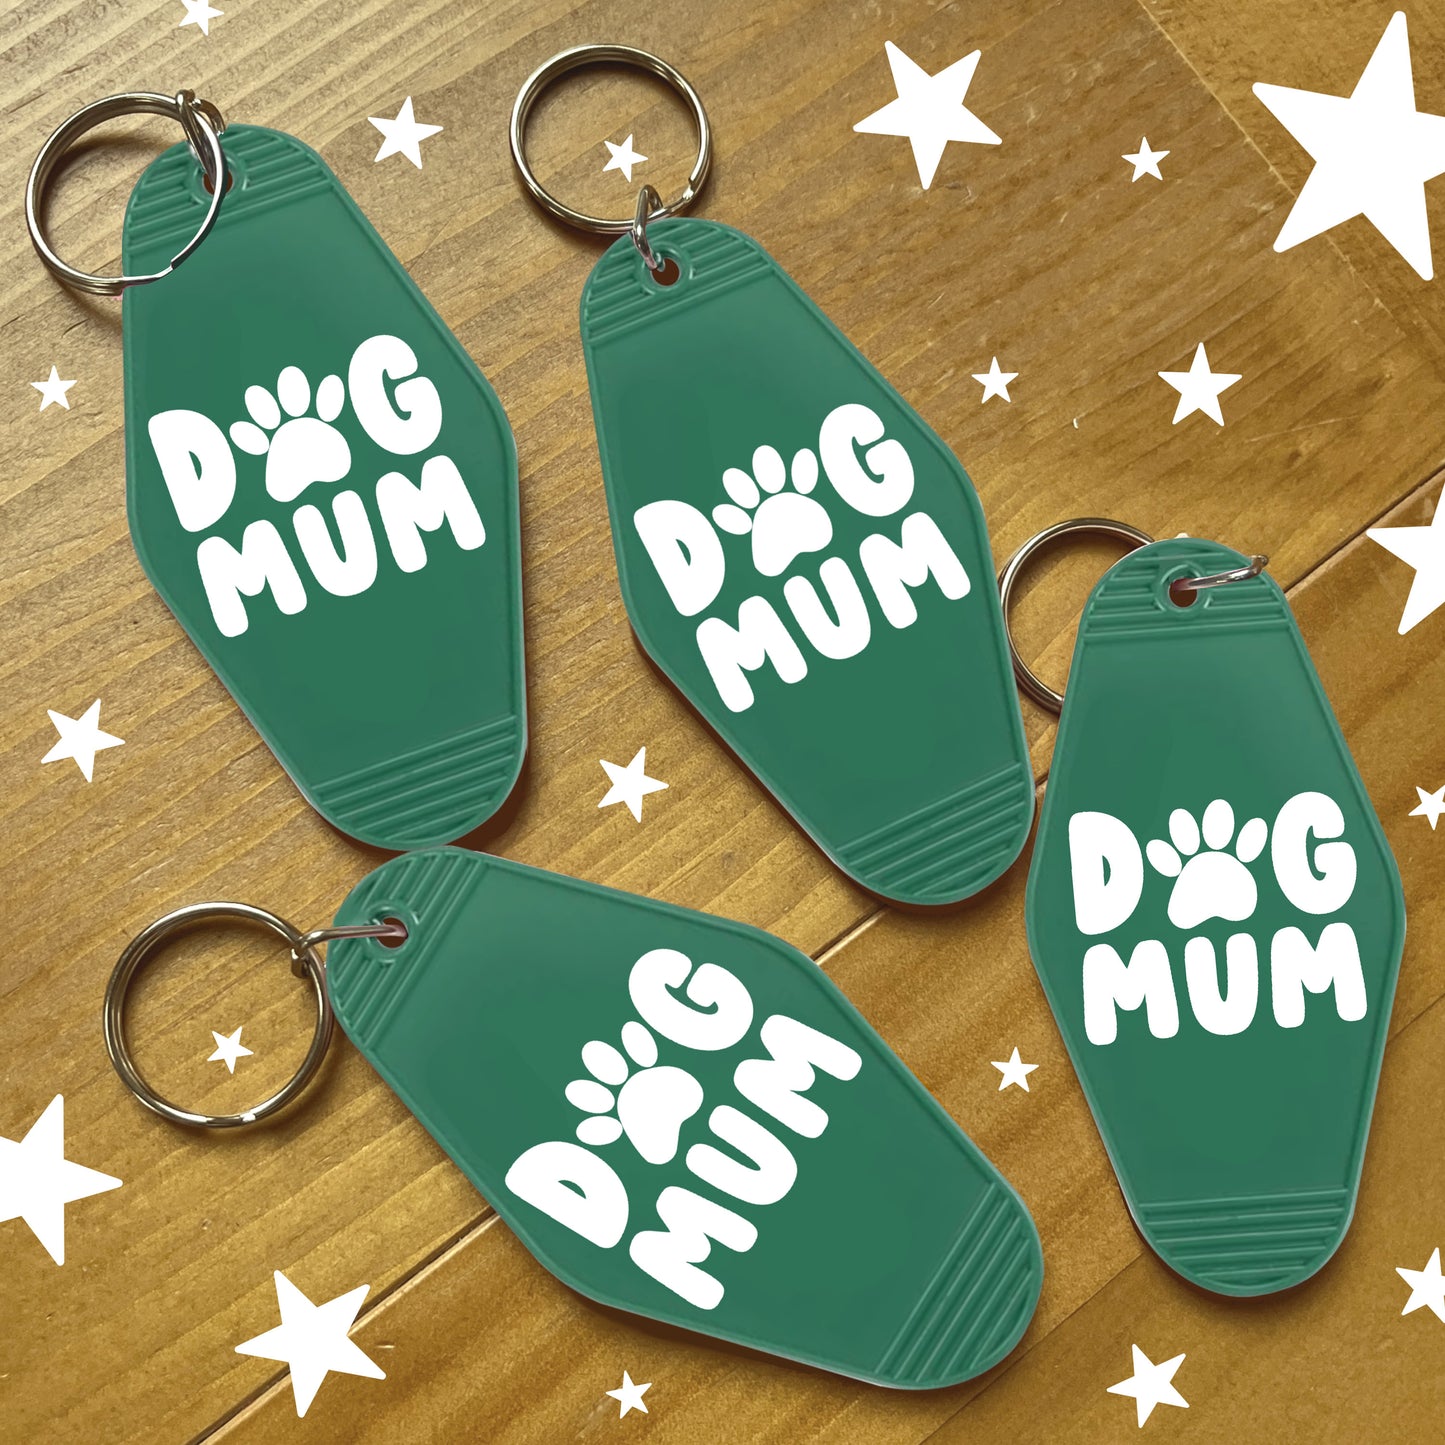 Dog Mum Keychain | Green Motel Style Keychains, Dog Gifts, Dog Owner Gifts, Dog Mom, Christmas Dog Gifts